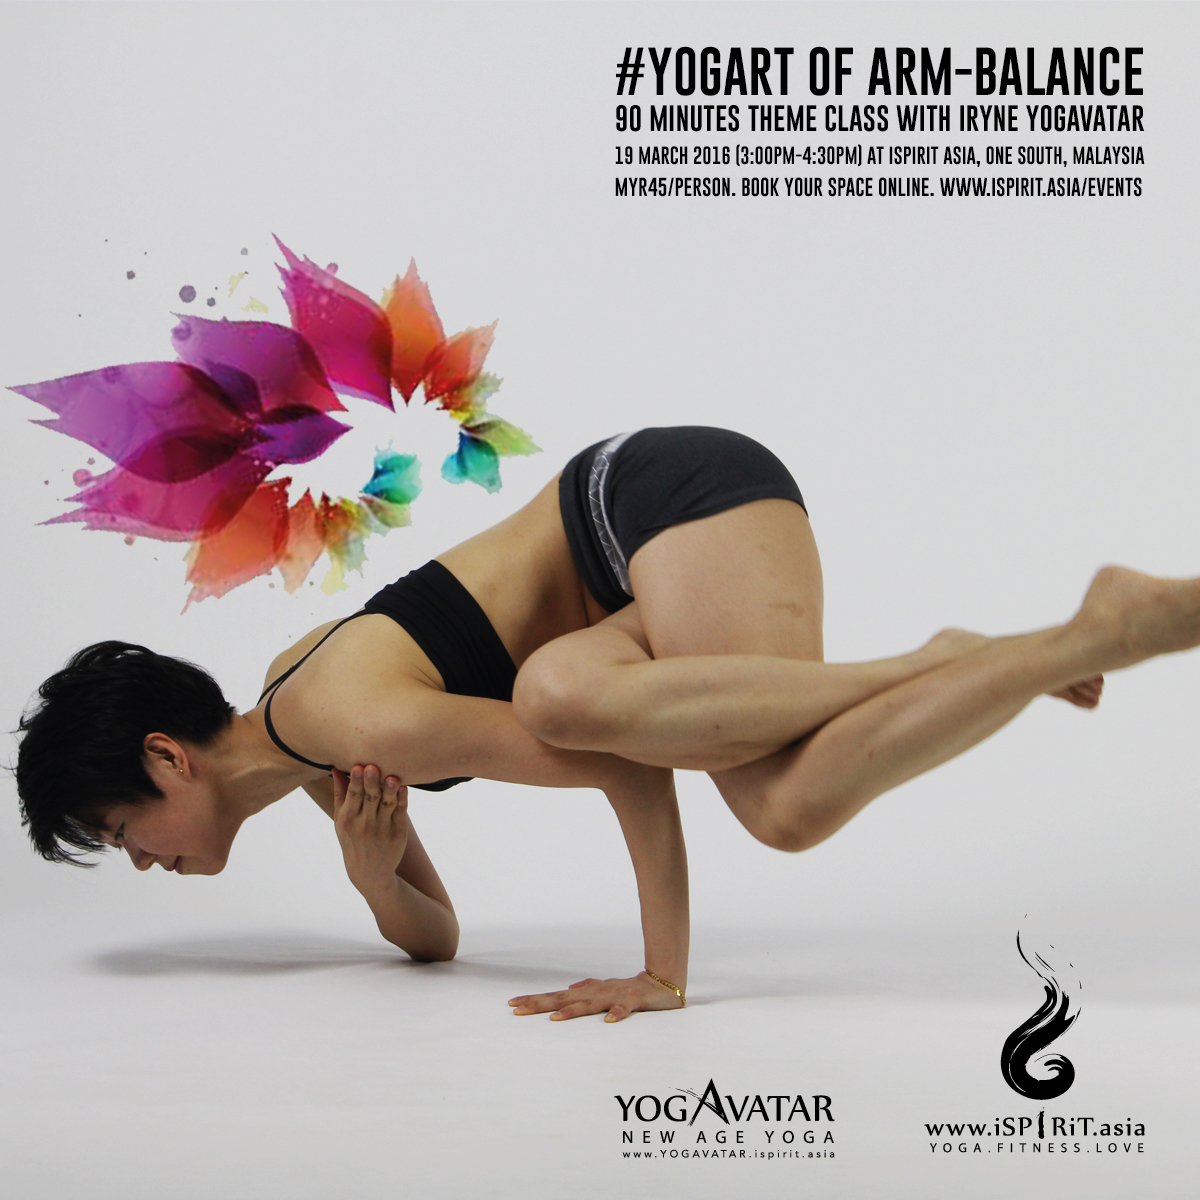 YOGART of arm balance: Theme class with iRyne Yogavatar poster v2